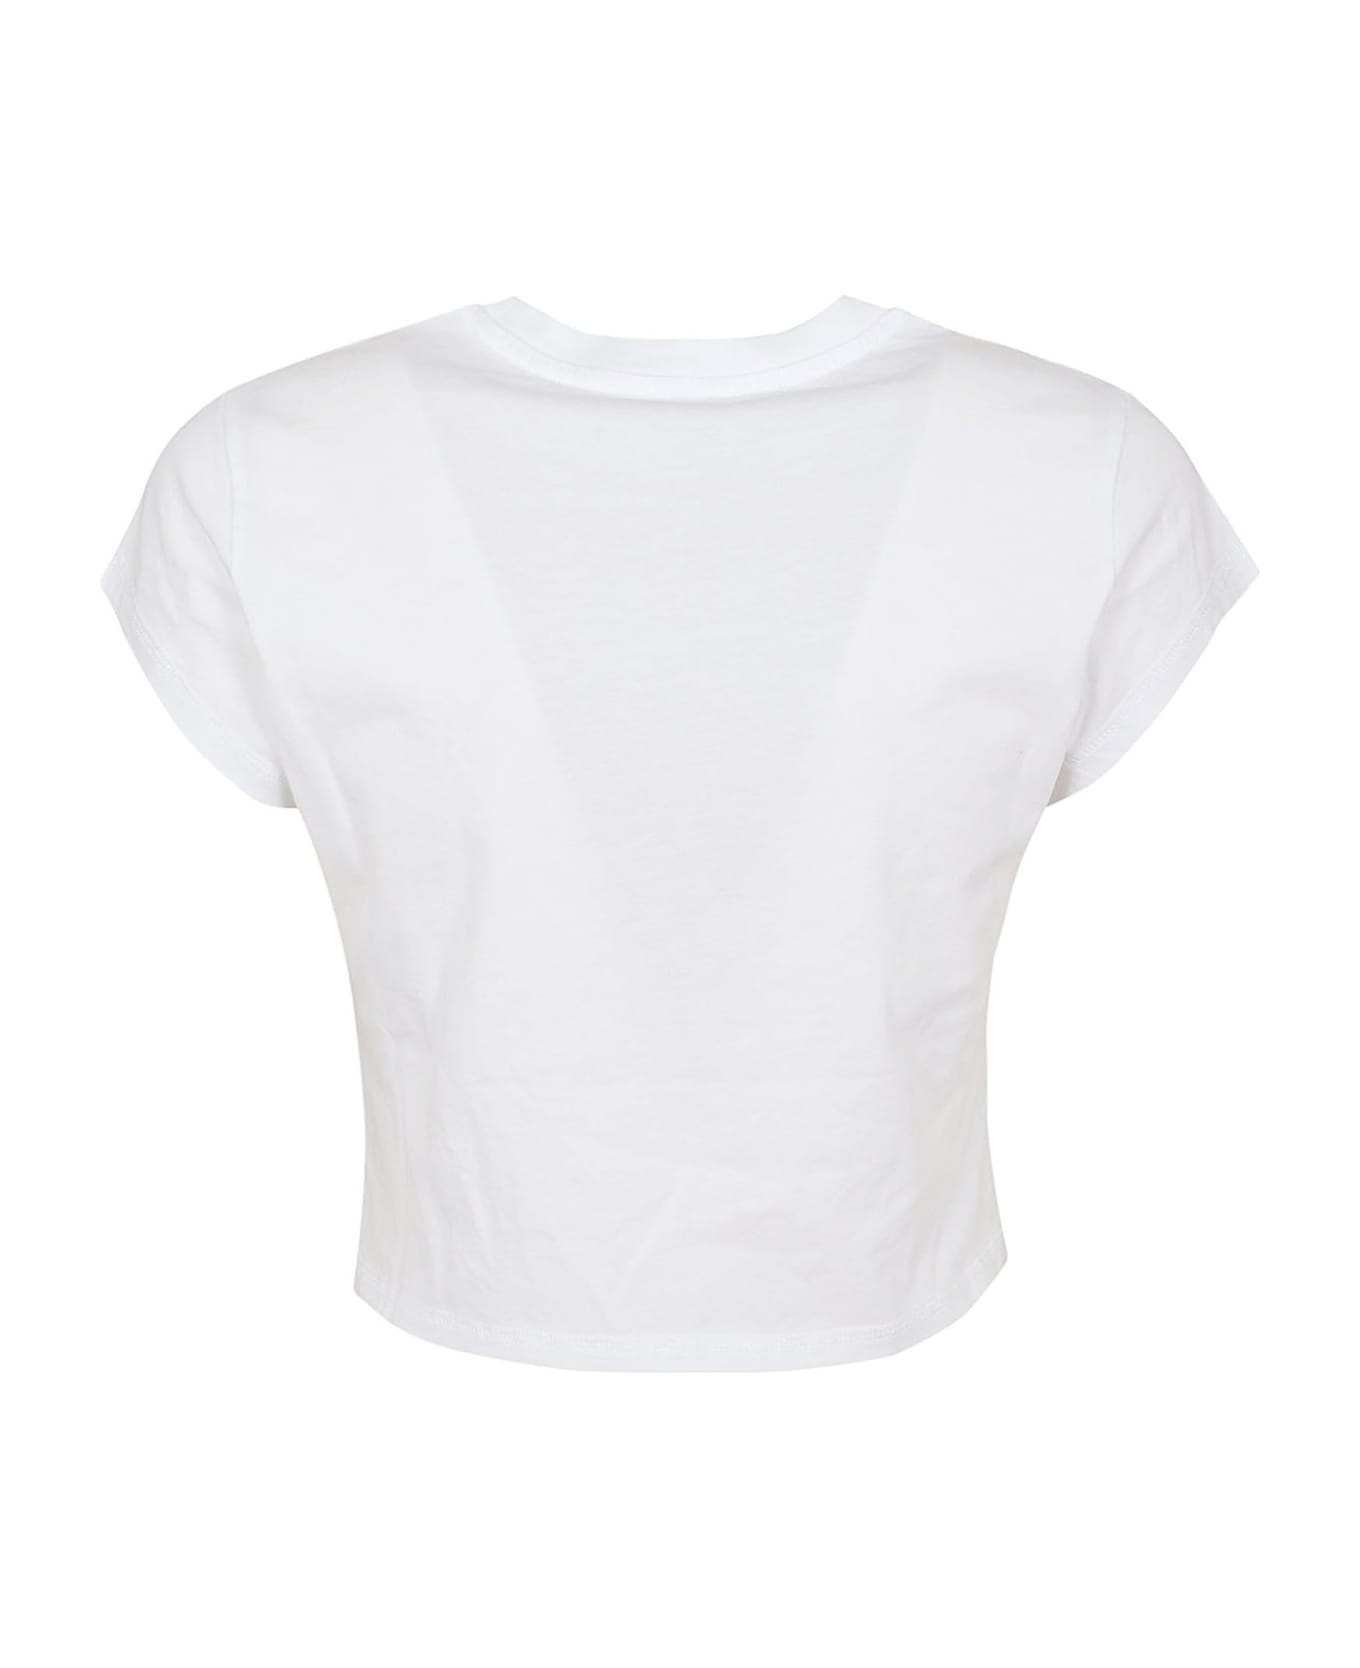 Kenzo Boke Crest T-shirt - White Tシャツ